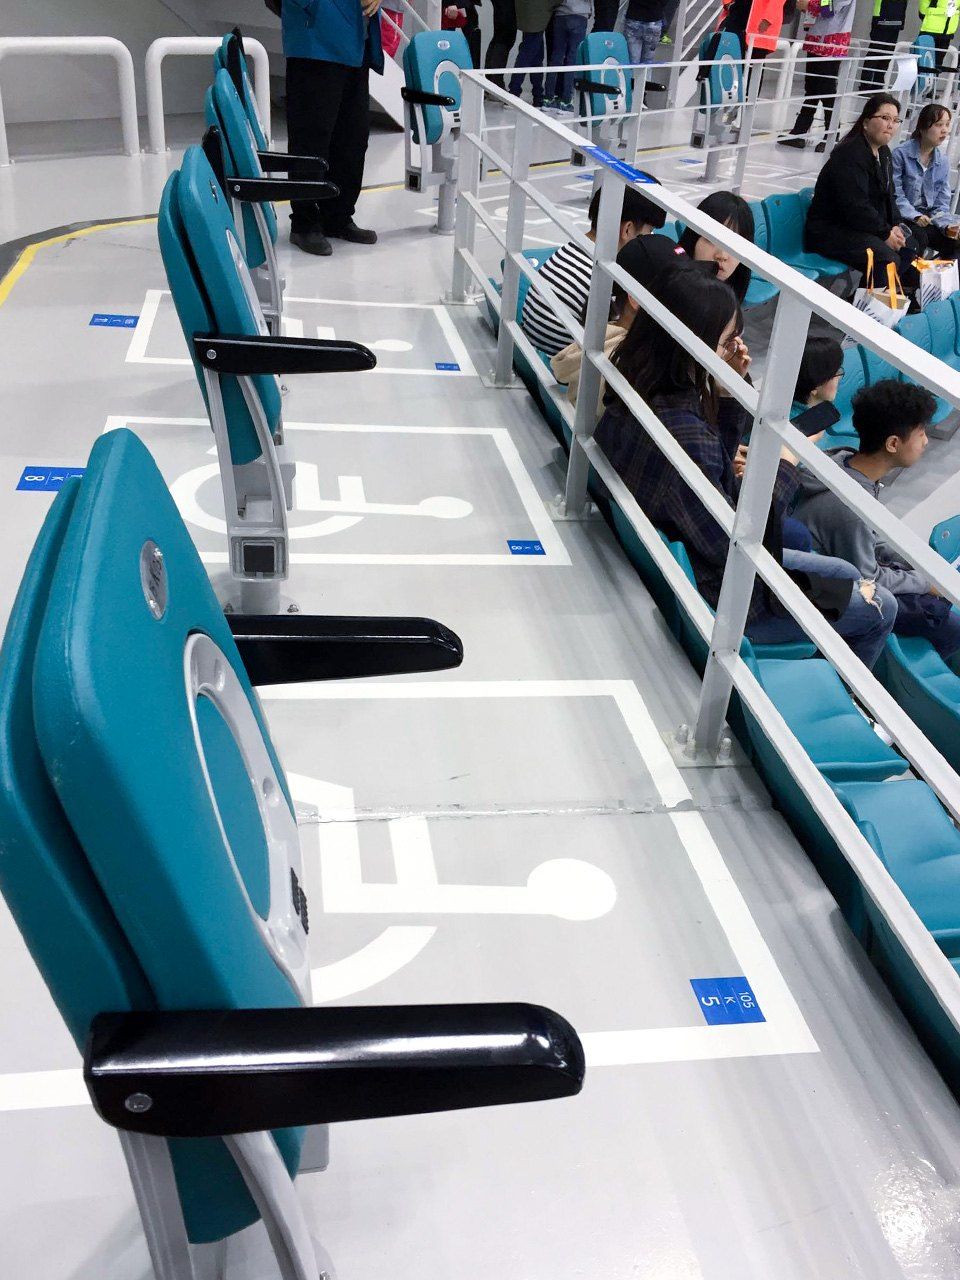 Wheelchair seating at the Pyeongchang Paralympic ice hockey arena.